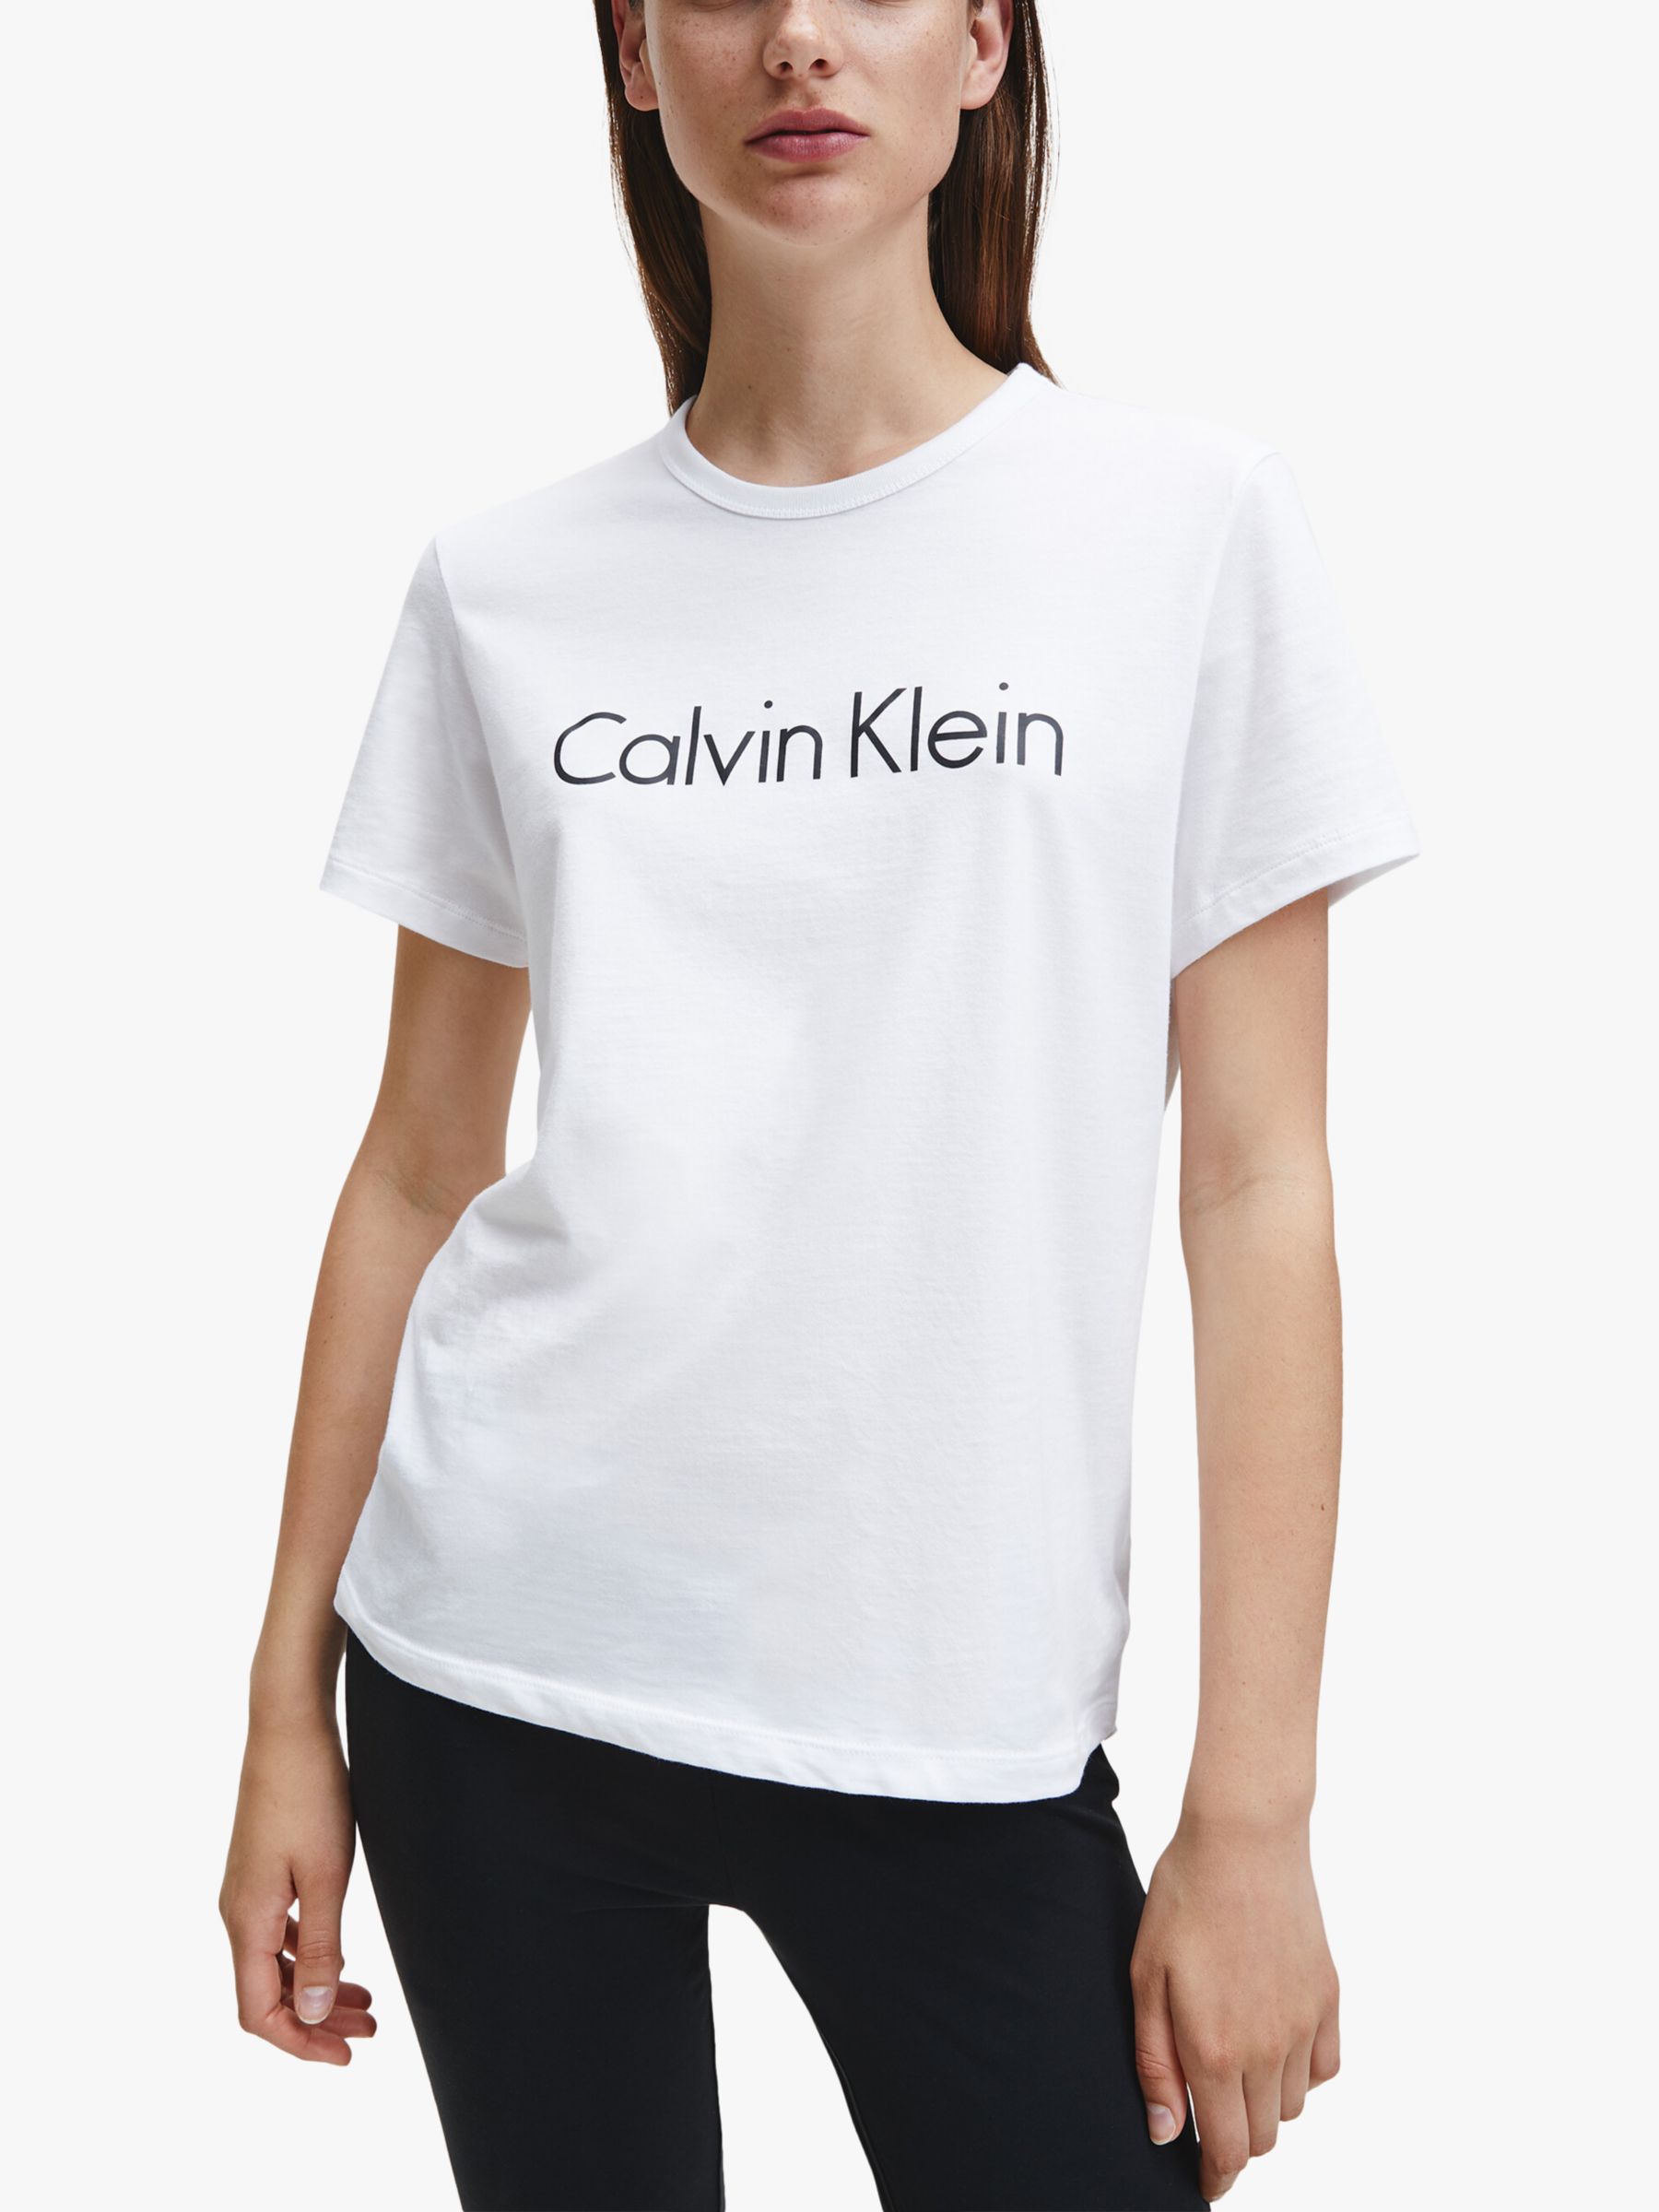 Calvin Klein - The perfect set, your way. Shop women's